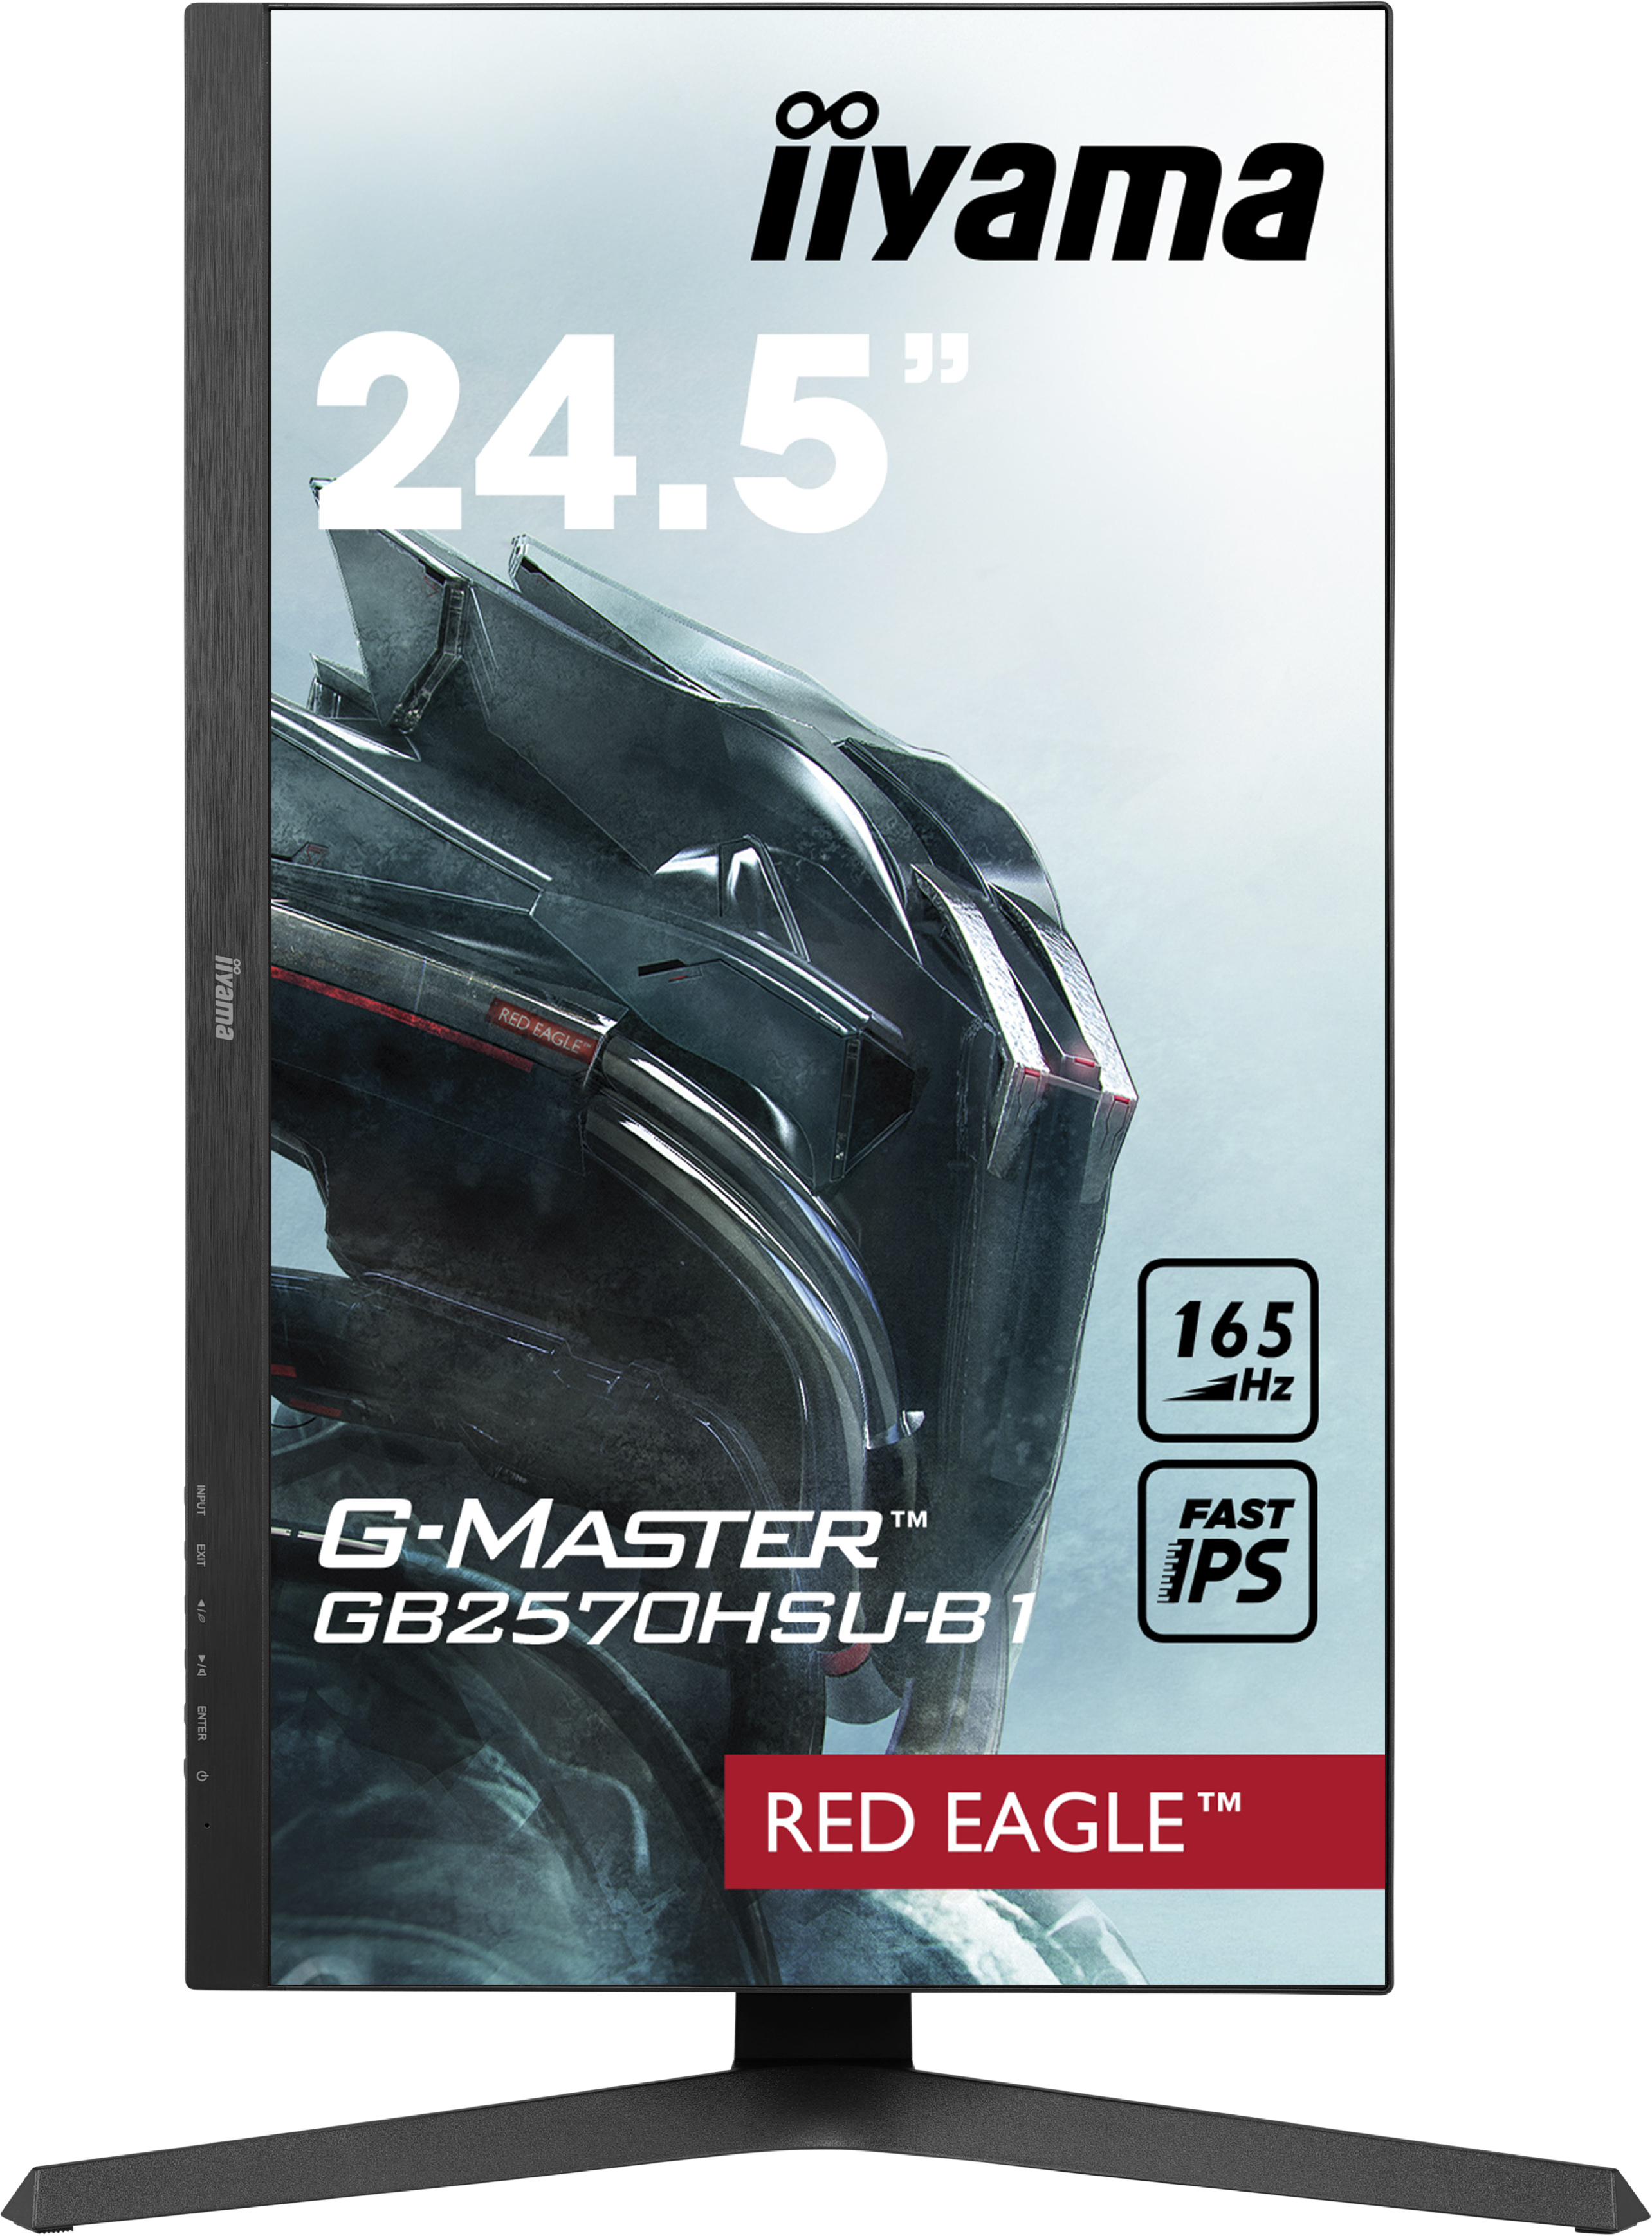 Iiyama G-MASTER GB2570HSU-B1 RED EAGLE | 24,5" | 1920 x 1080 @165Hz (2.1 megapixel Full HD) | Gaming Monitor